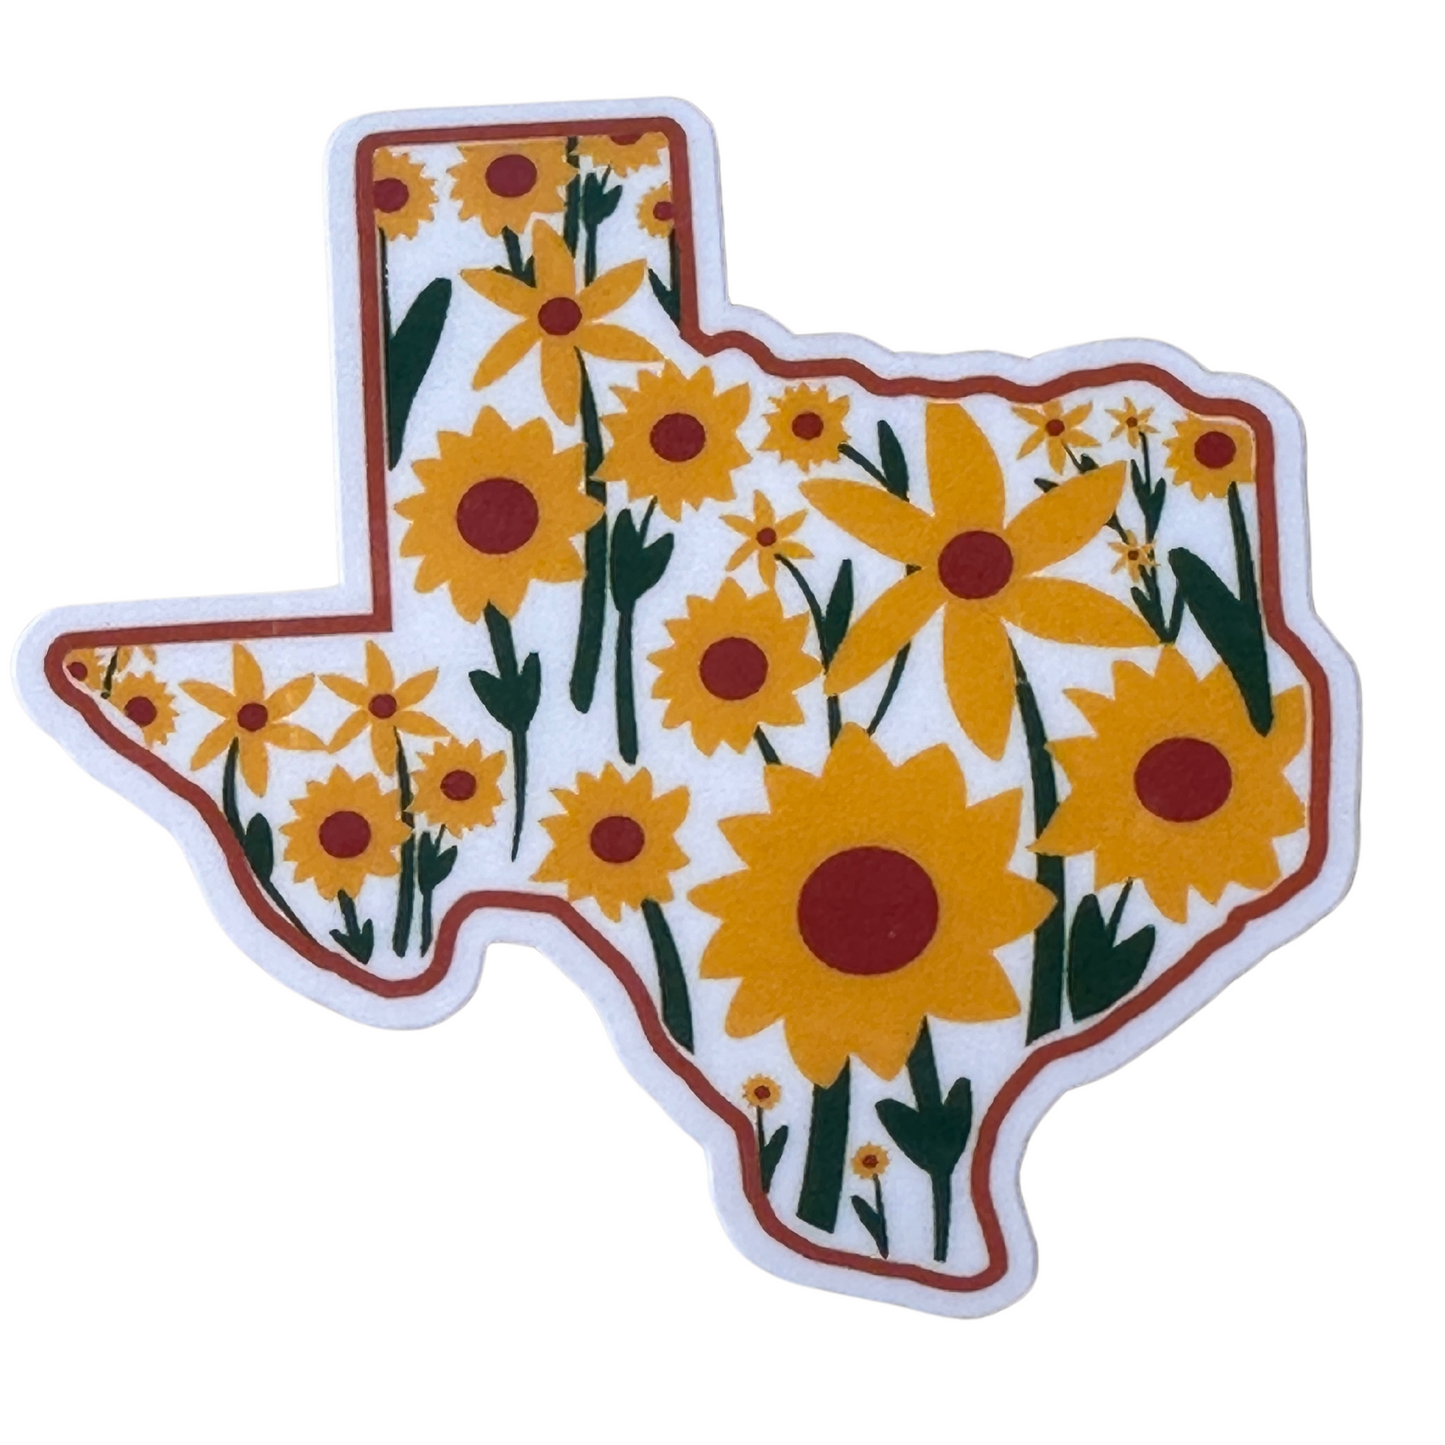 Texas Sunflowers